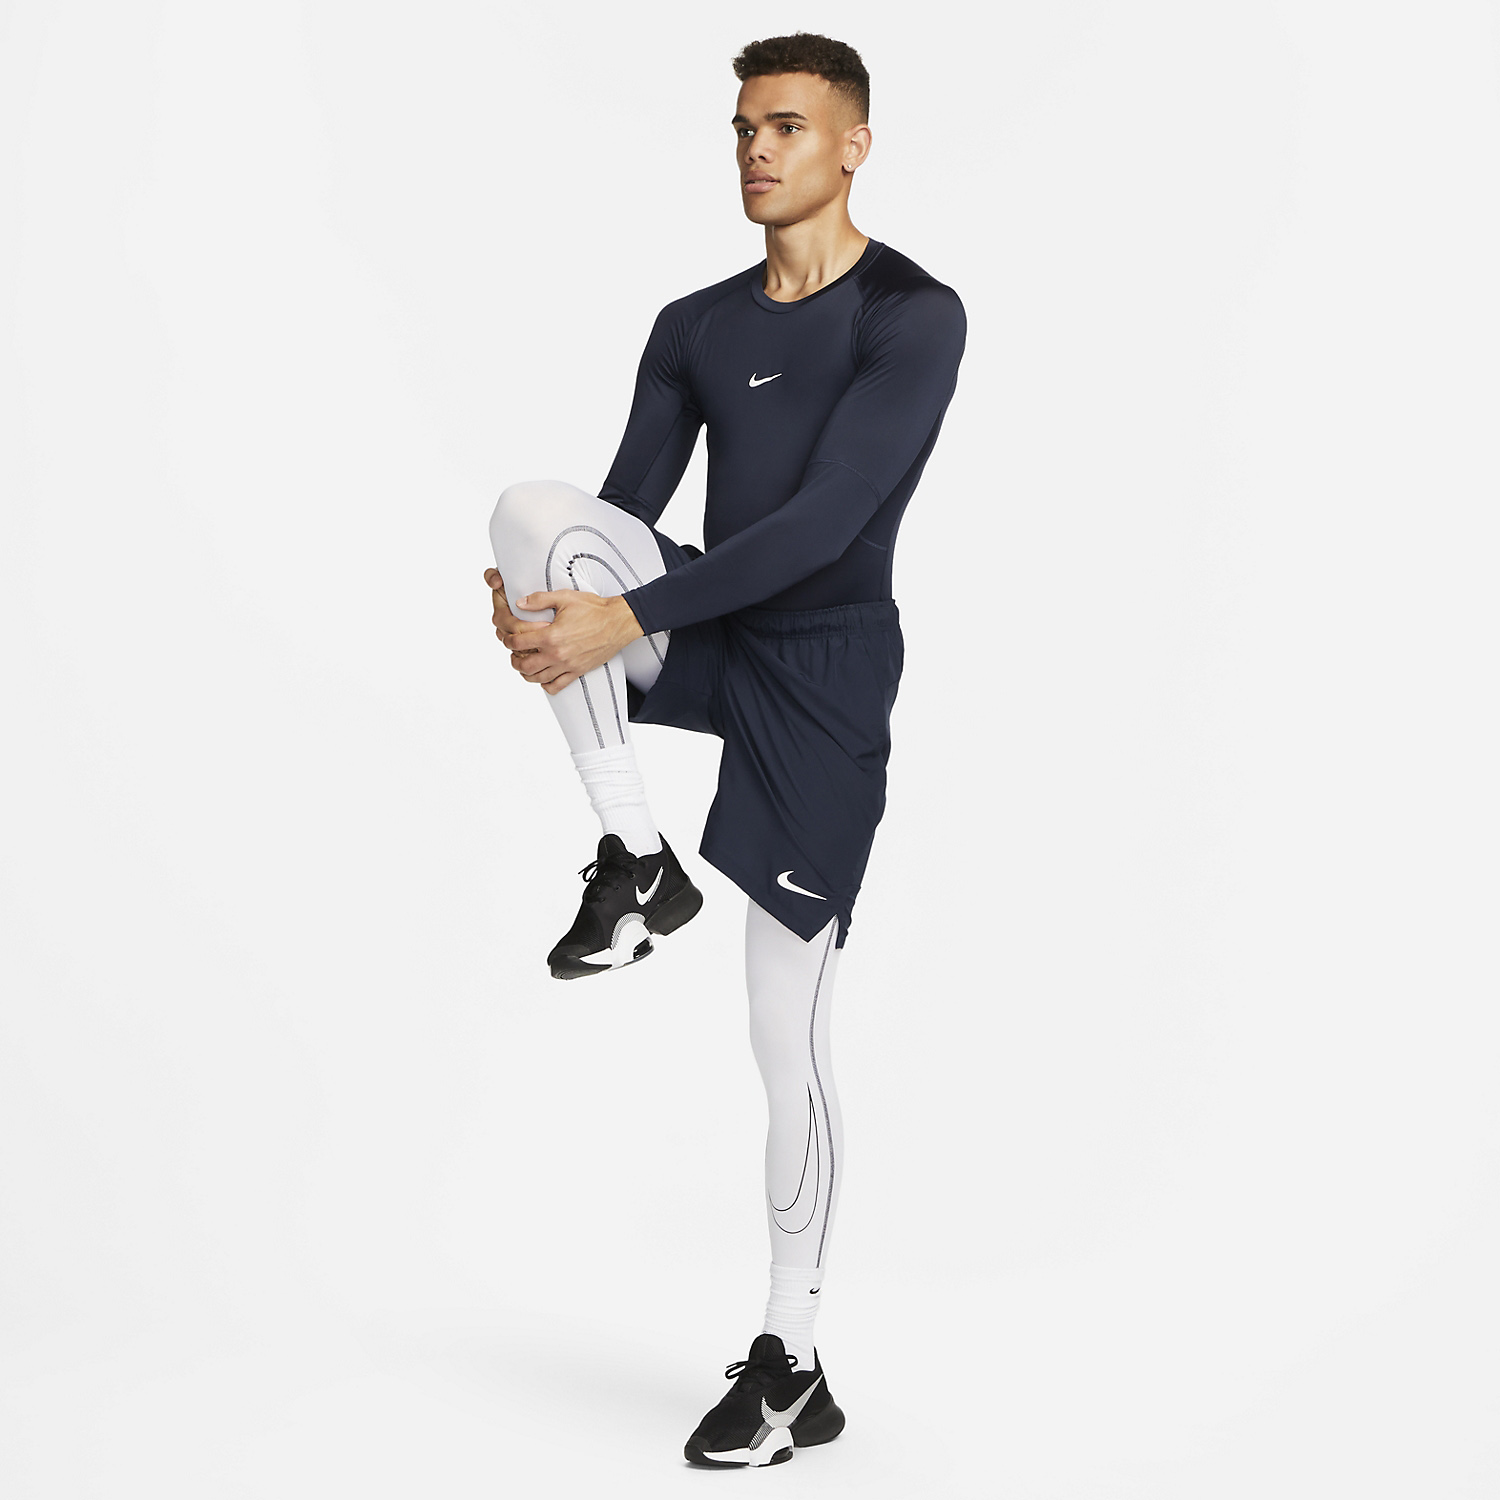 Nike Dri-FIT Pro Shirt - Obsidian/White